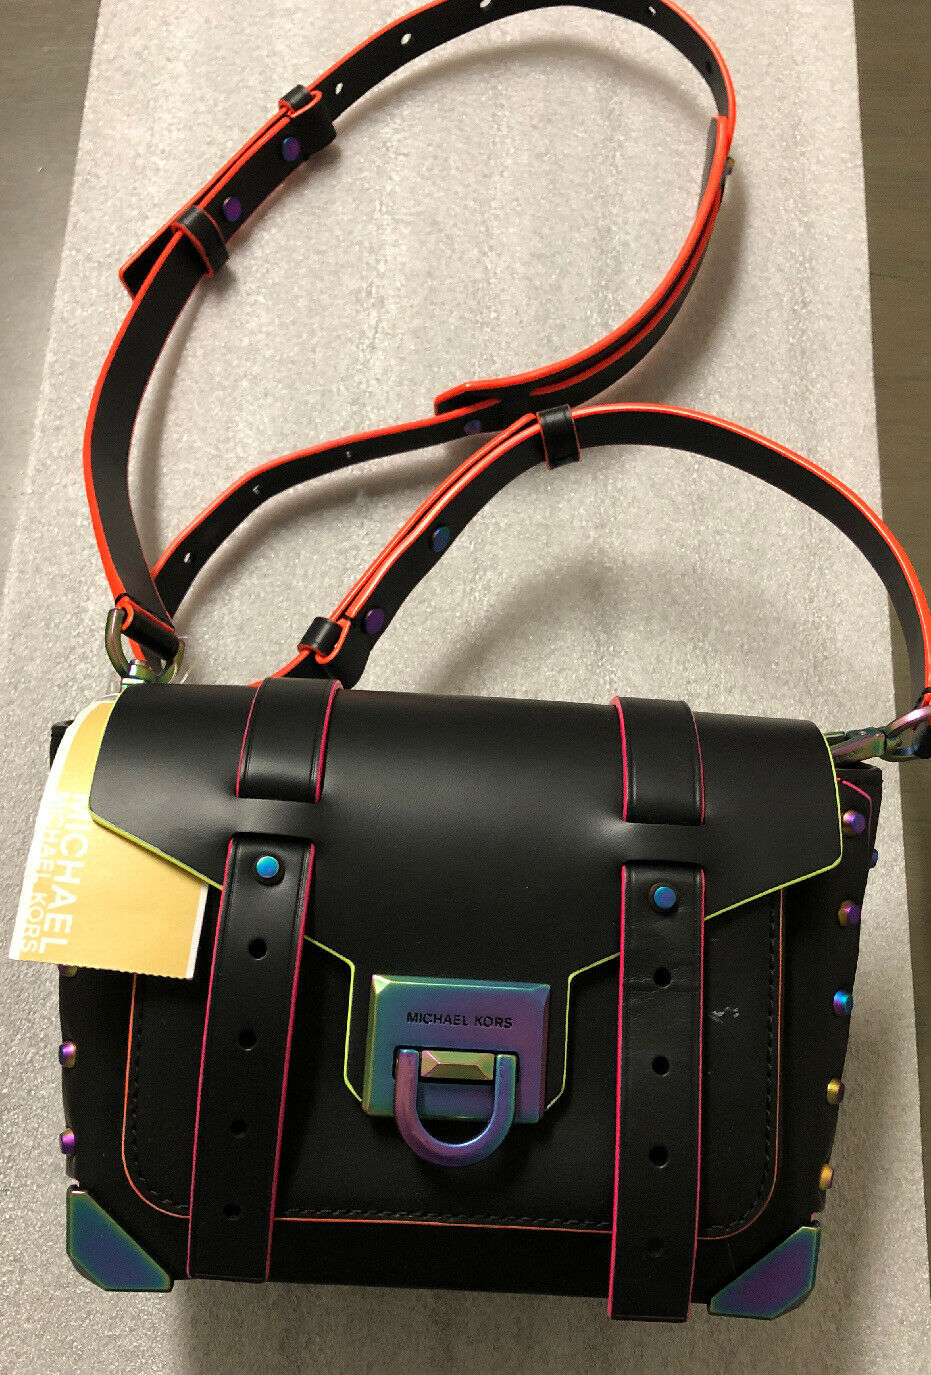 michael kors black neon purse